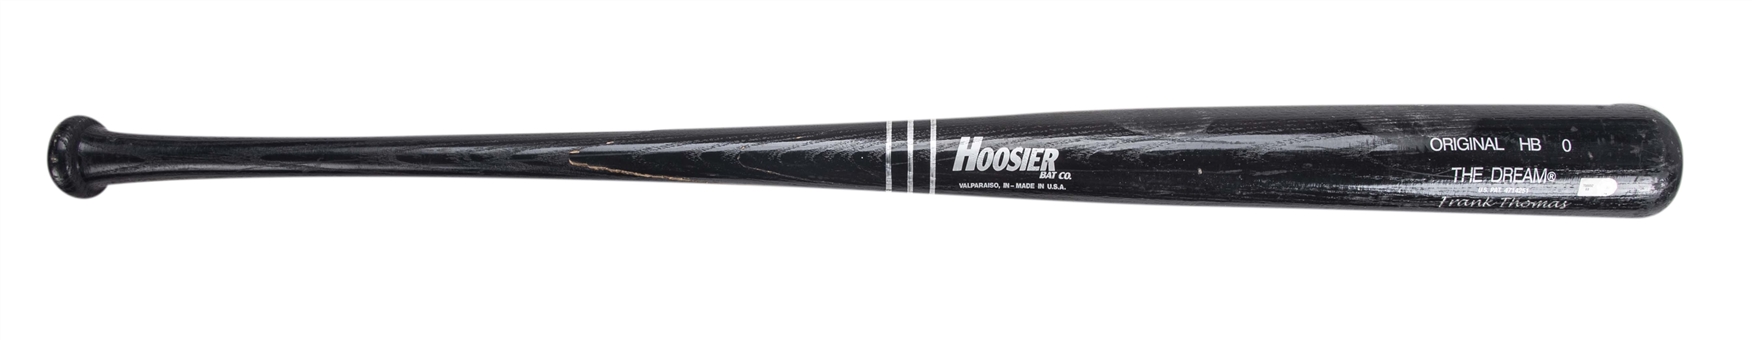 2008 Frank Thomas Game Used Hoosier HB0 Model Bat (MLB Authenticated)